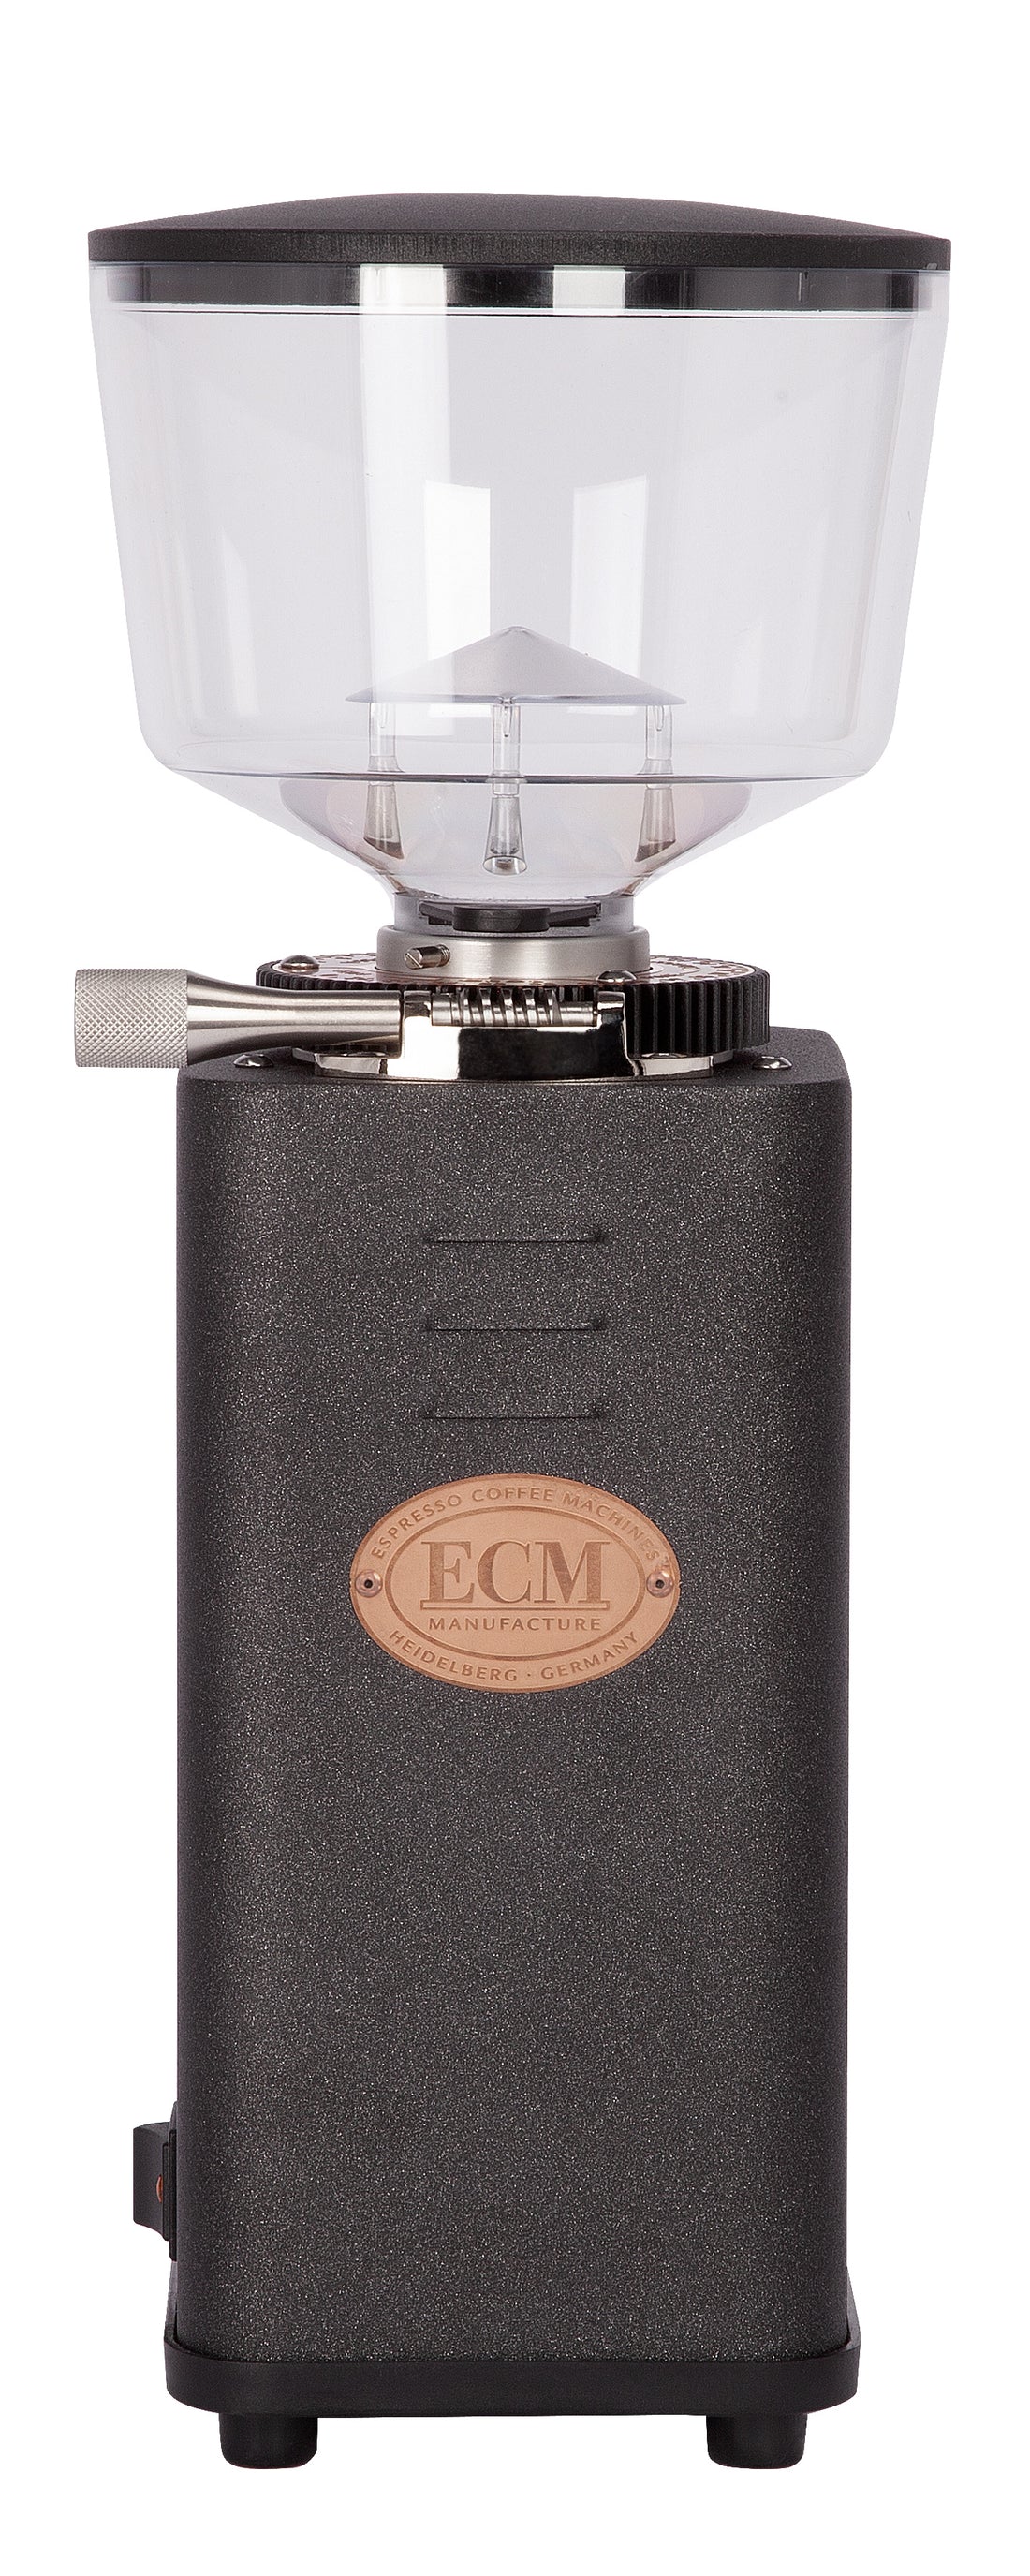 ECM S-Manuale 64 Espresso Grinder Heritage Line